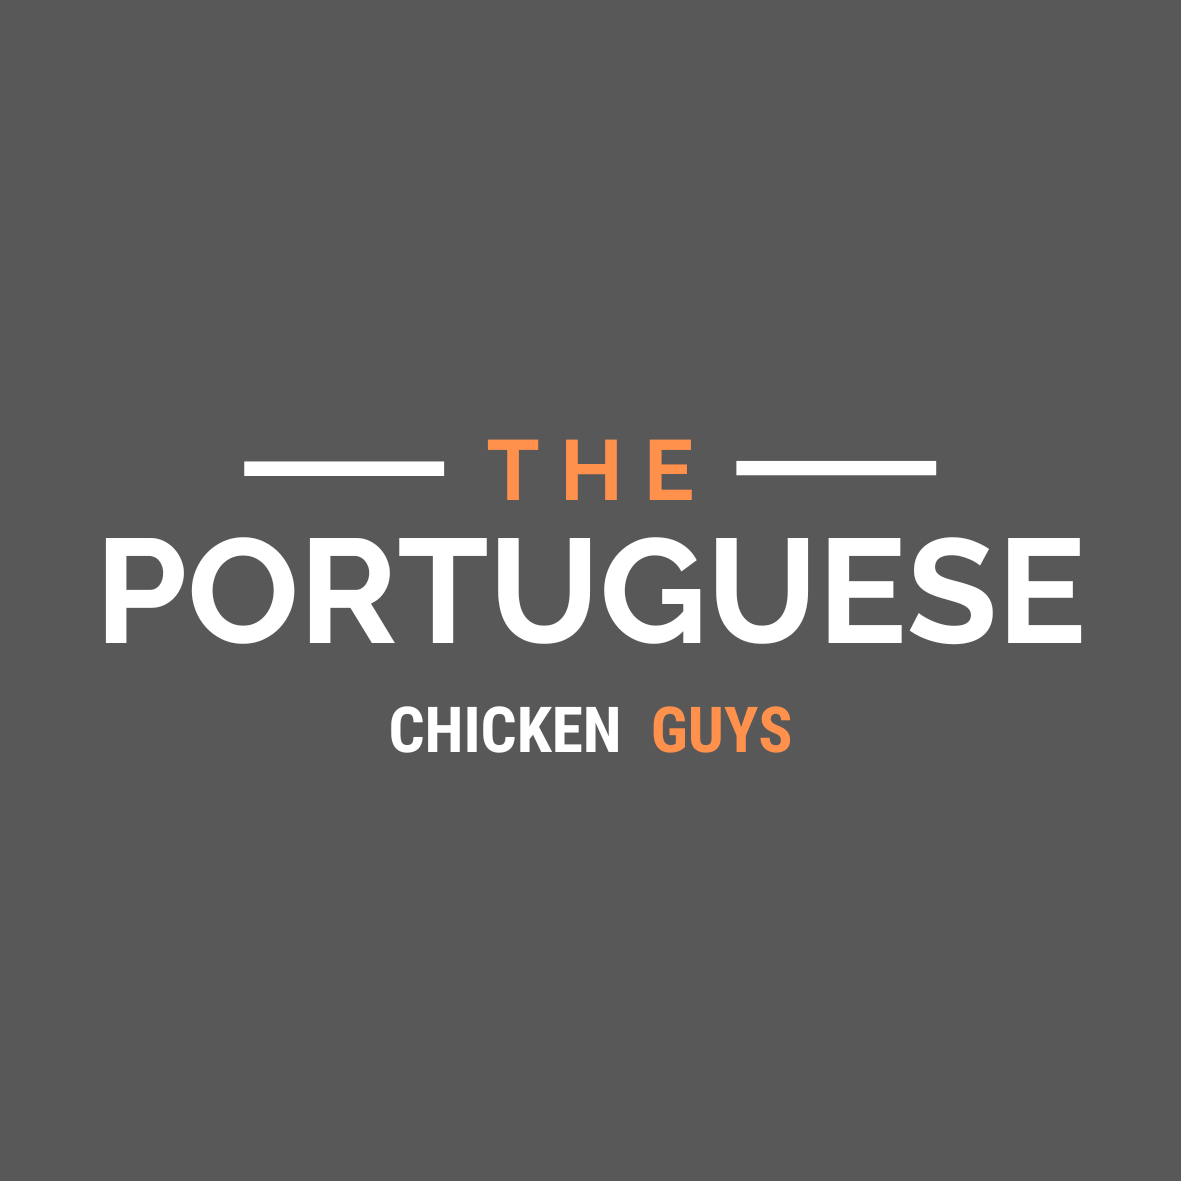 The Portuguese Chicken Guys logo